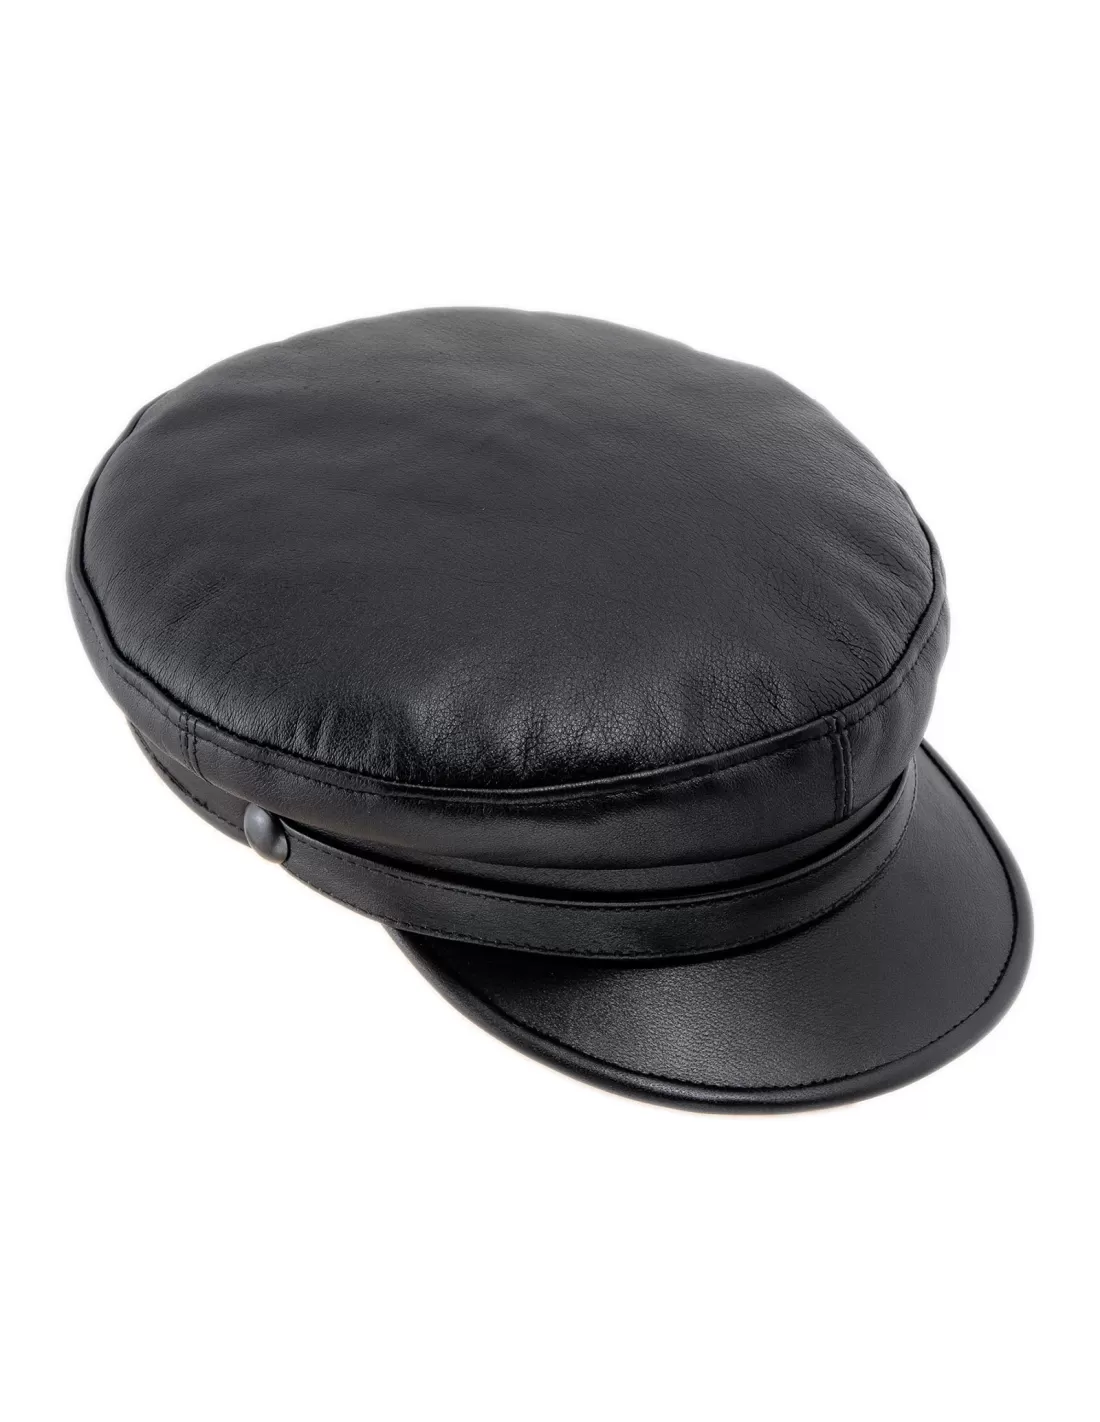 Trawler - fisherman hat, sailor cap made of 100% natural leather